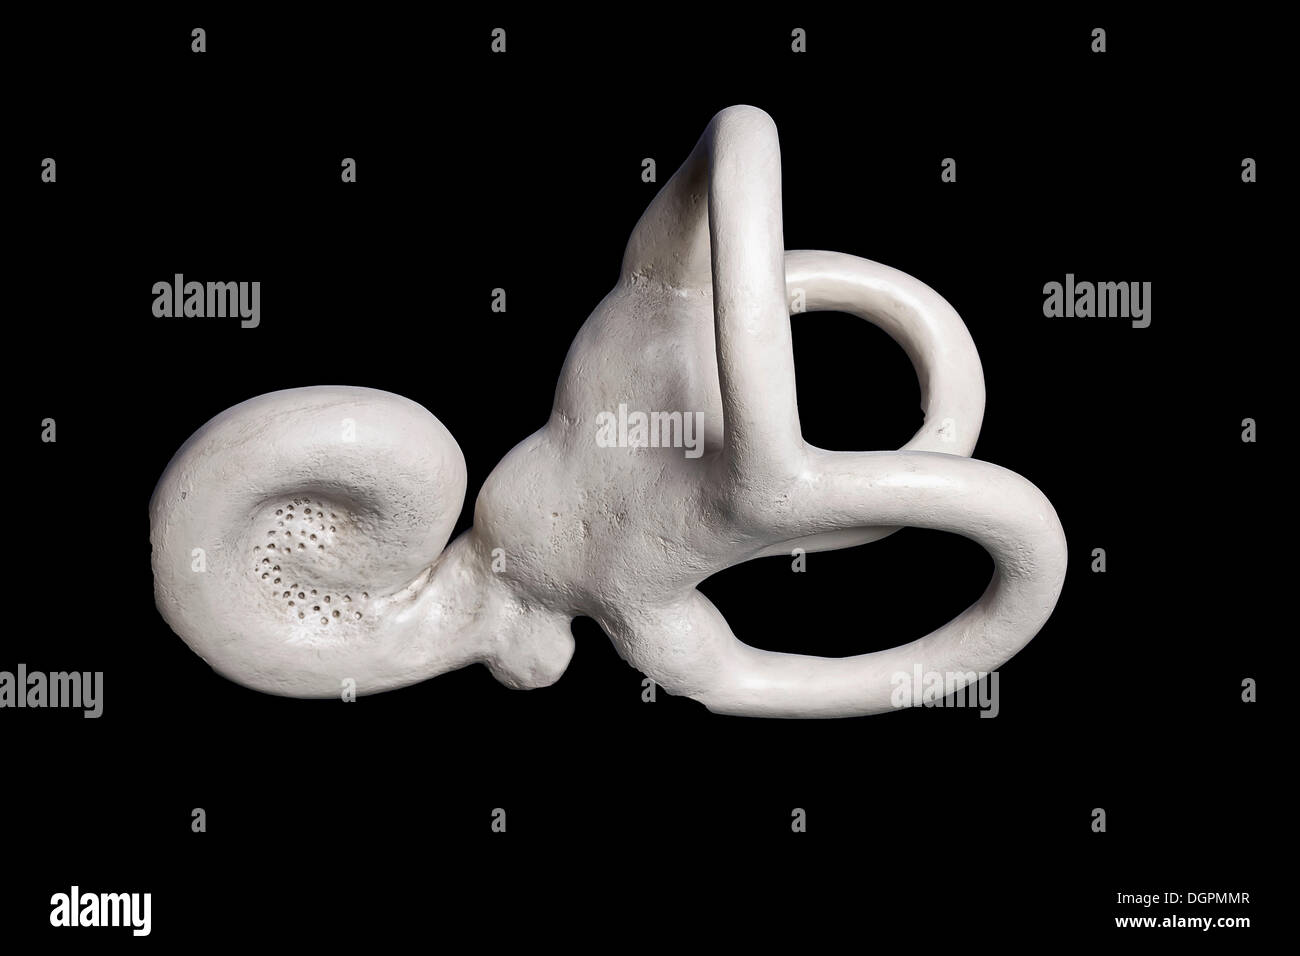 Human inner ear, anatomical model Stock Photo